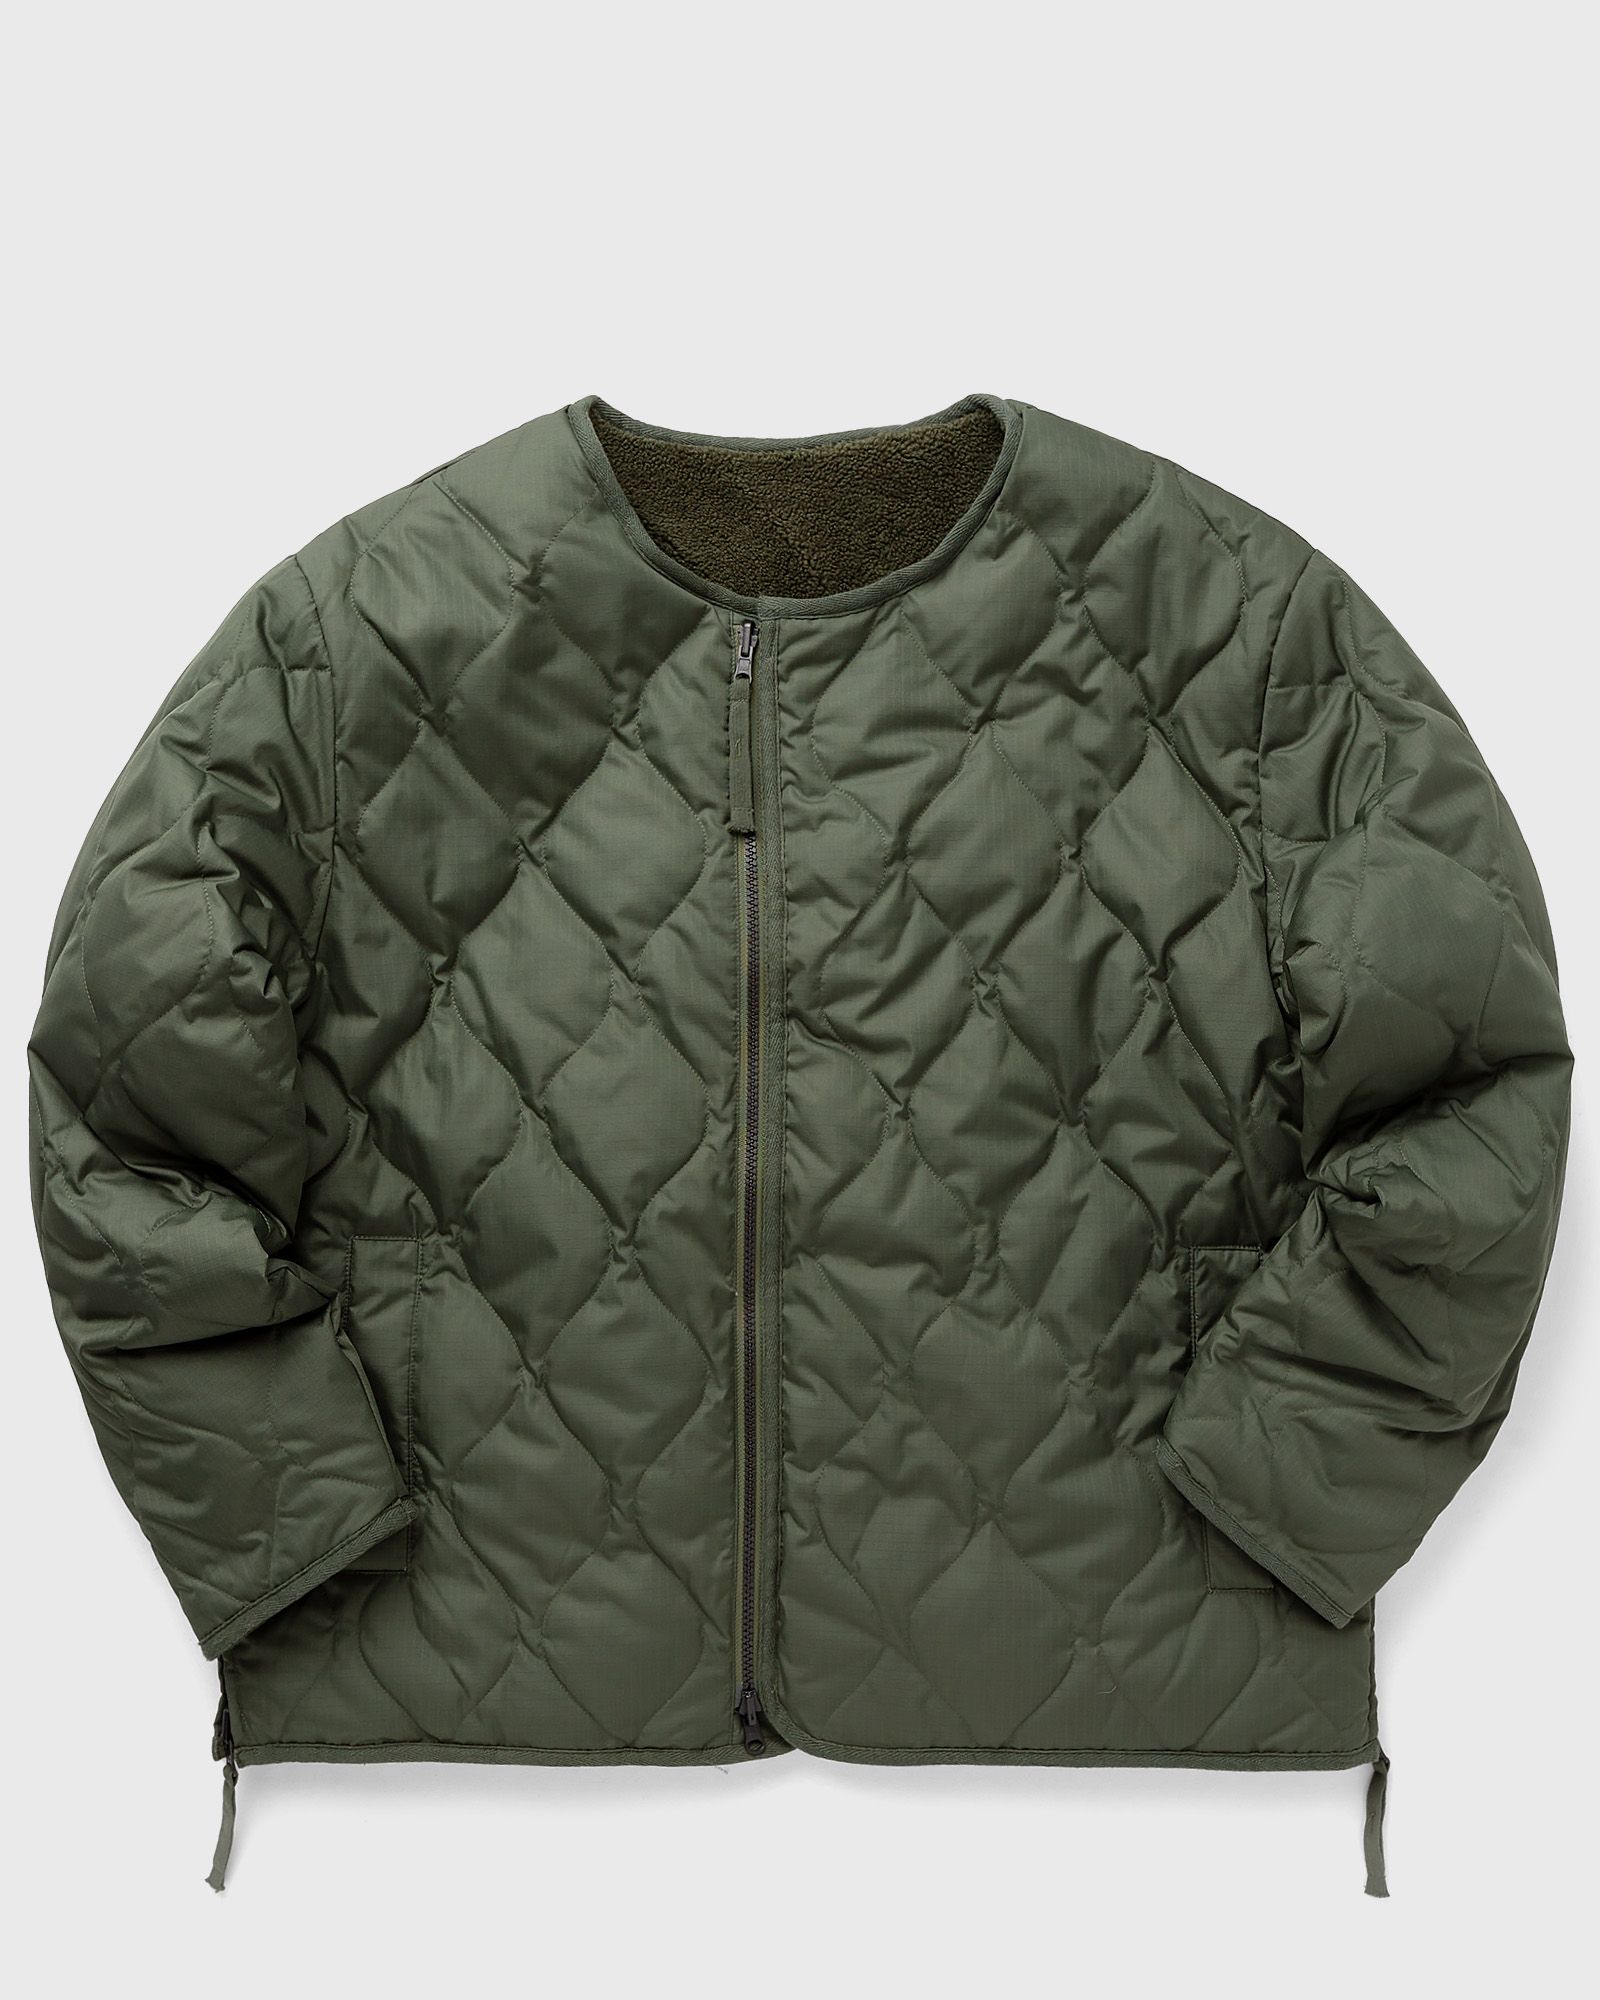 Taion - military rvsb crew-neck jacket men windbreaker green in größe:xxl